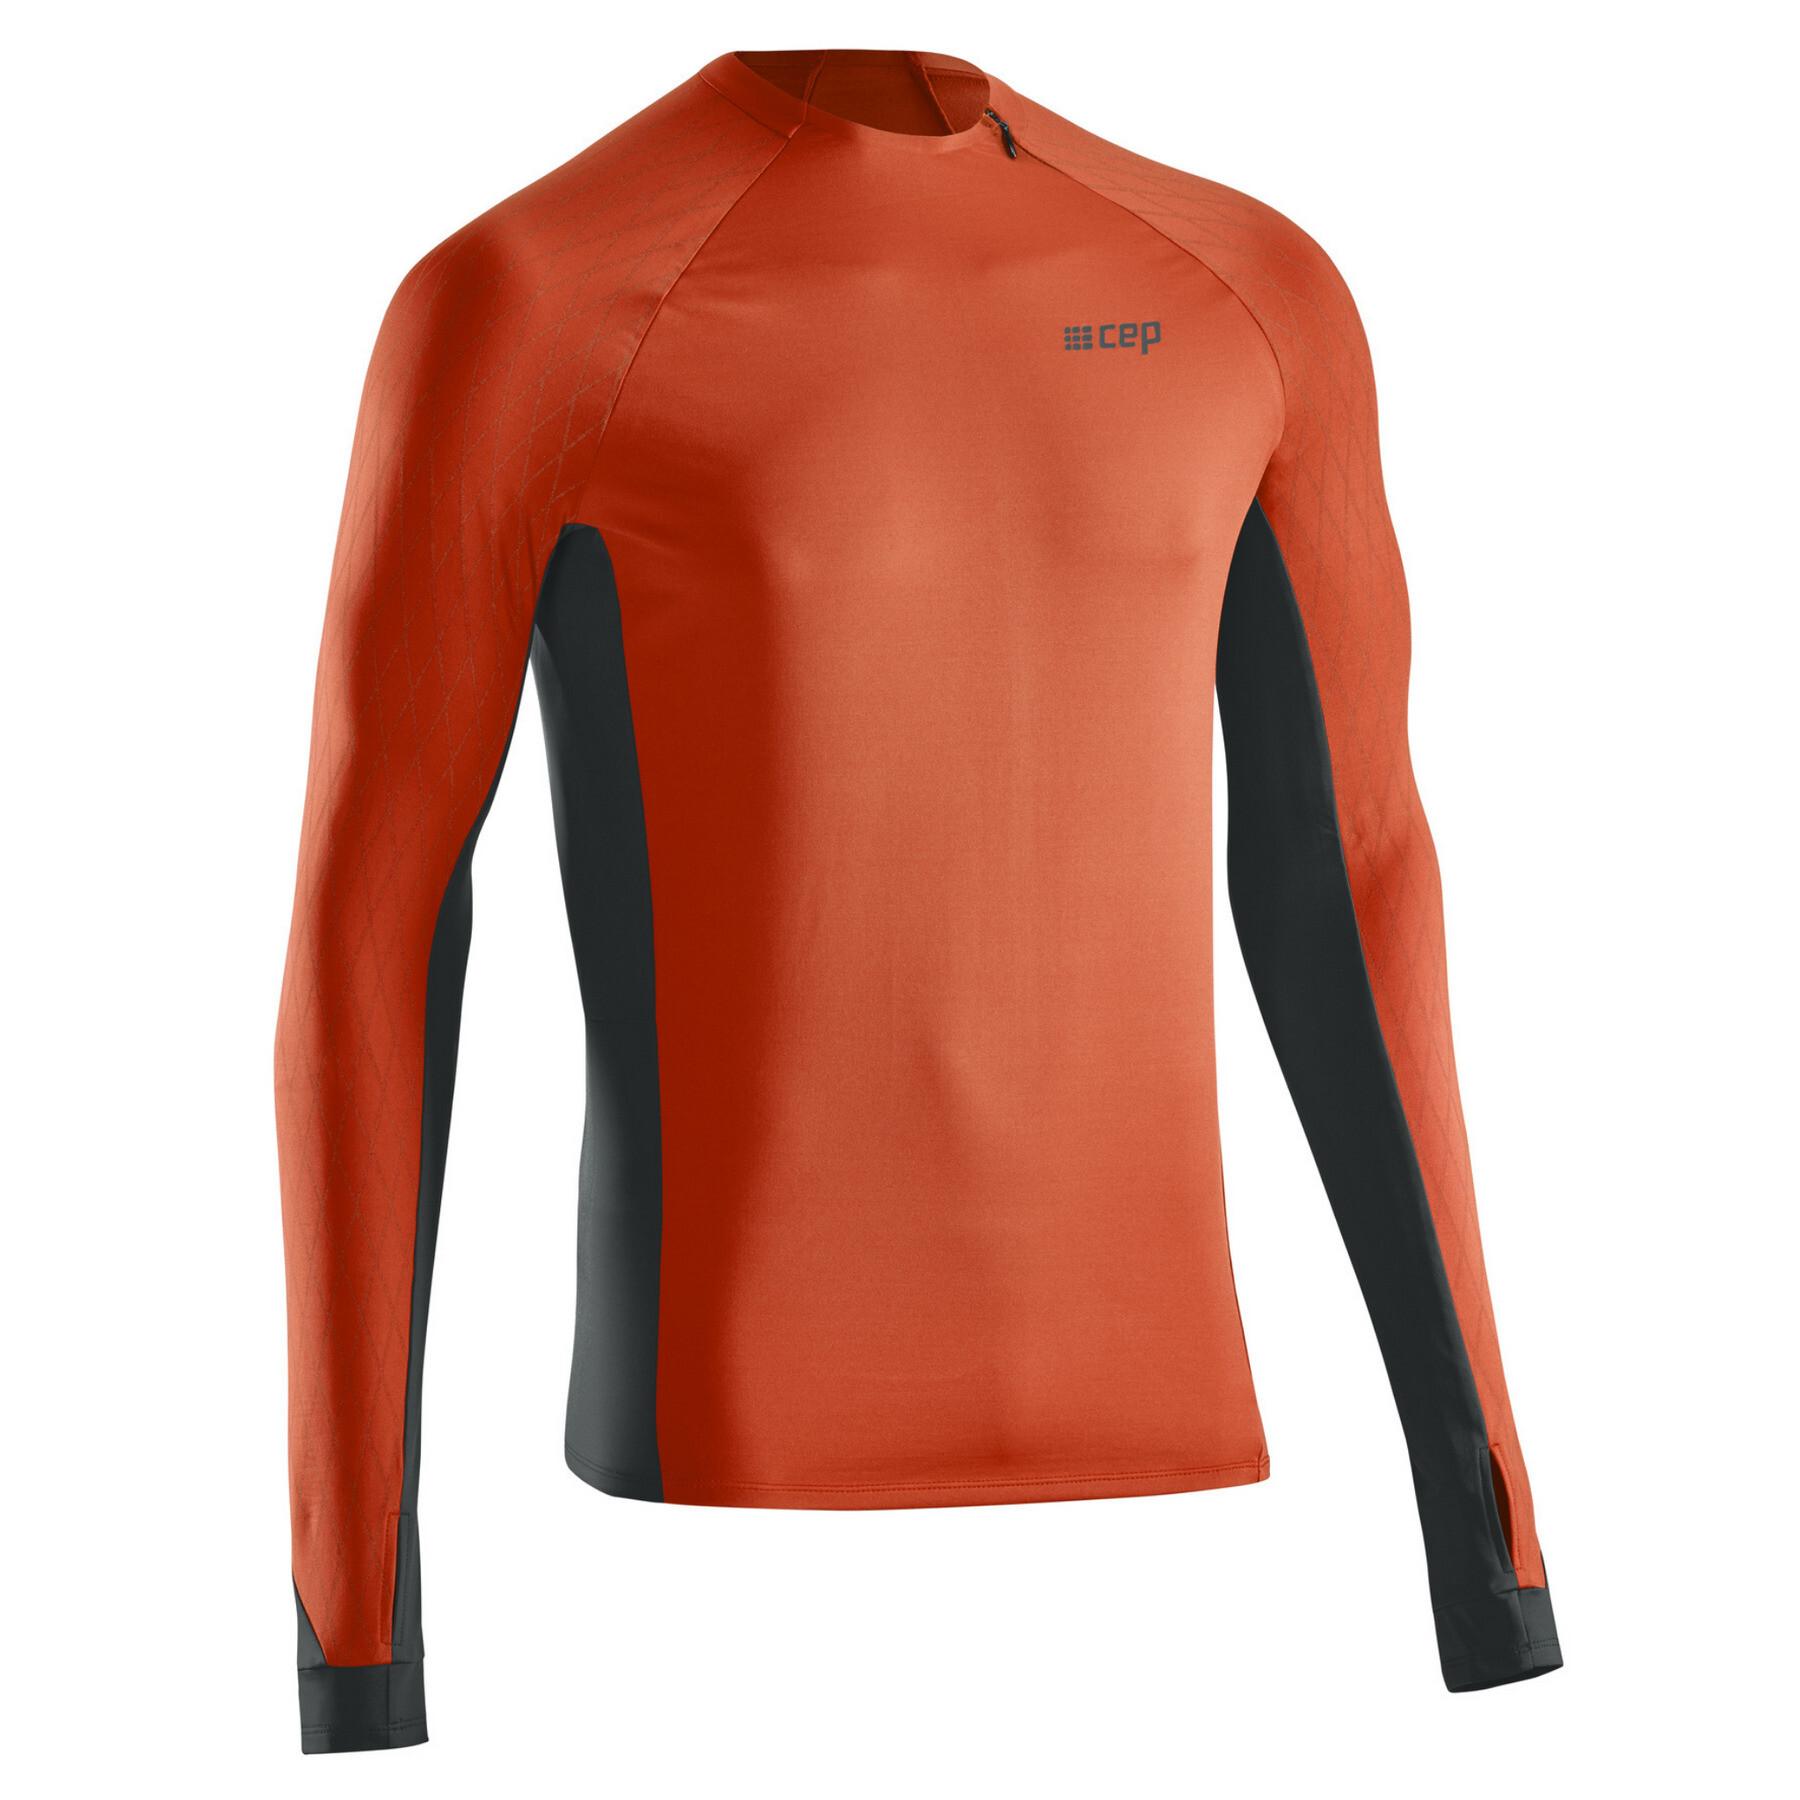 Long sleeve jersey for cold weather CEP Compression - Jerseys - Men's wear  - Handball wear